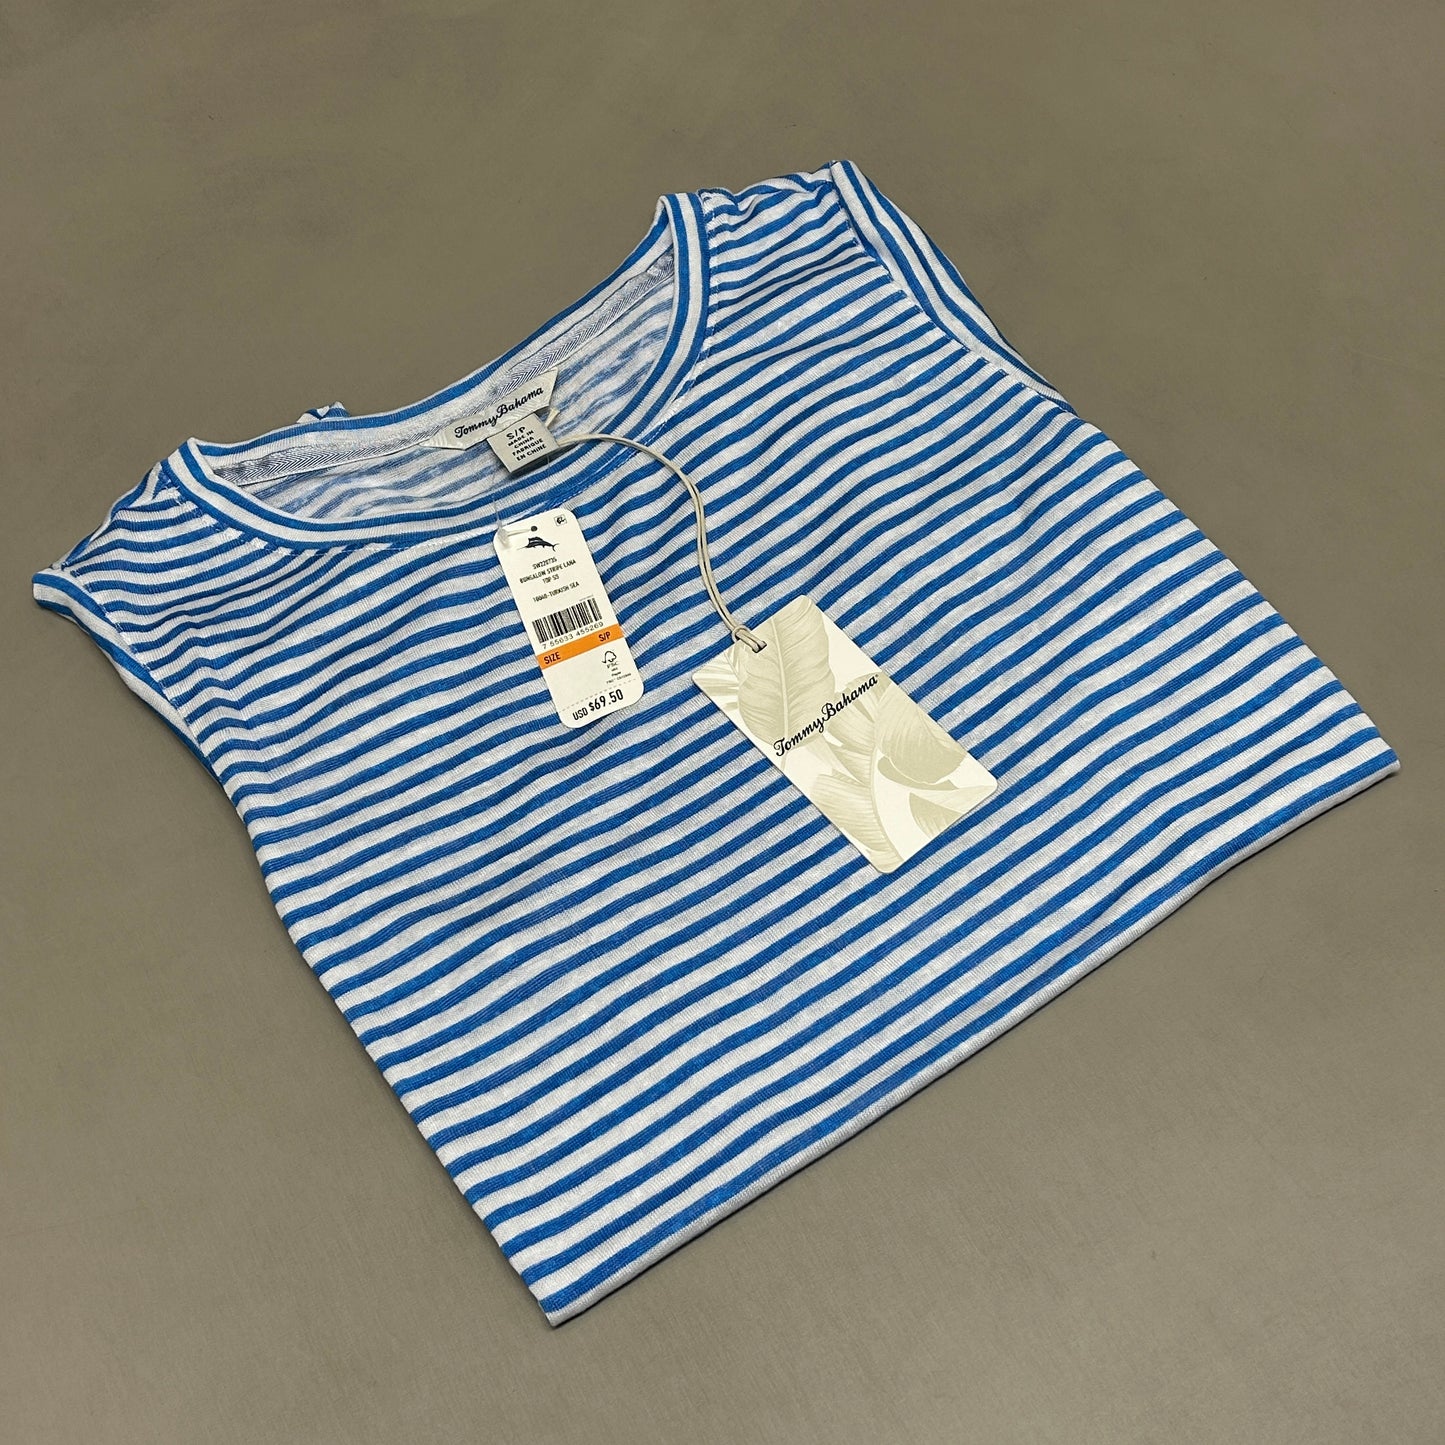 TOMMY BAHAMA Women's Bungalow Stripe Lana Top Short Sleeve Blue/White Size S(New)